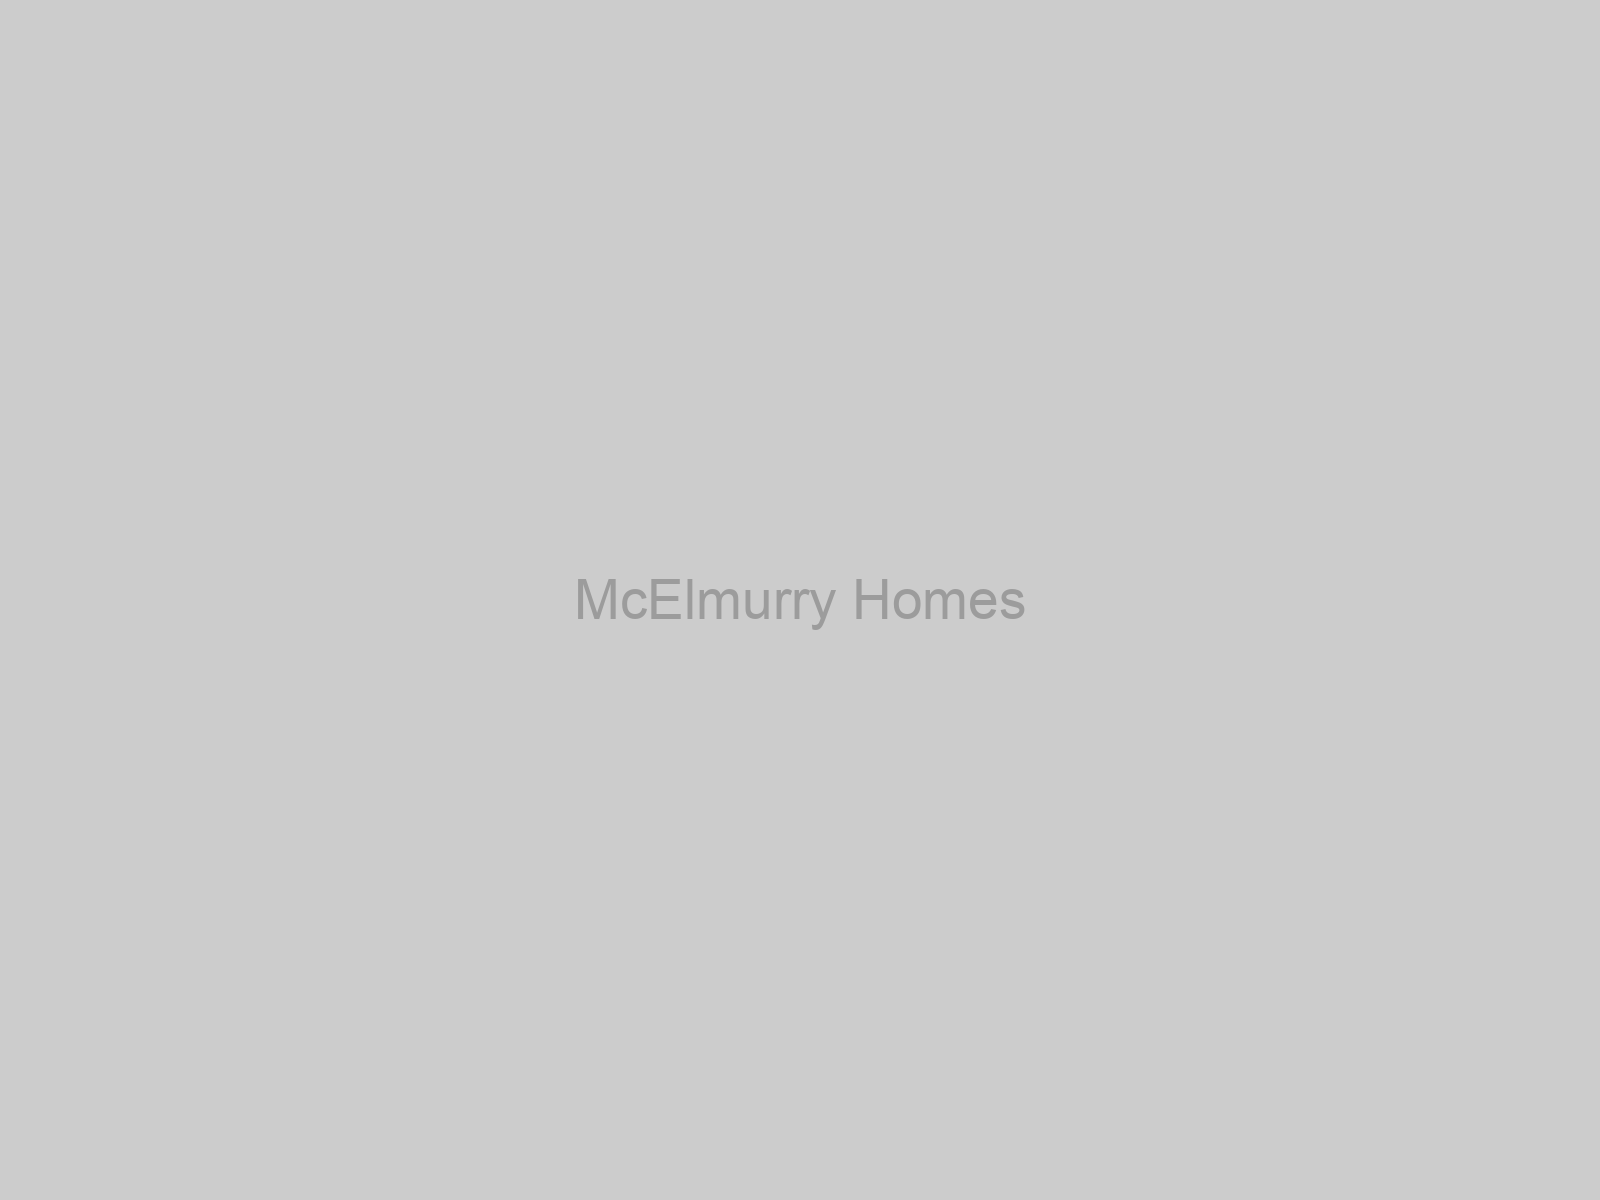 McElmurry Homes